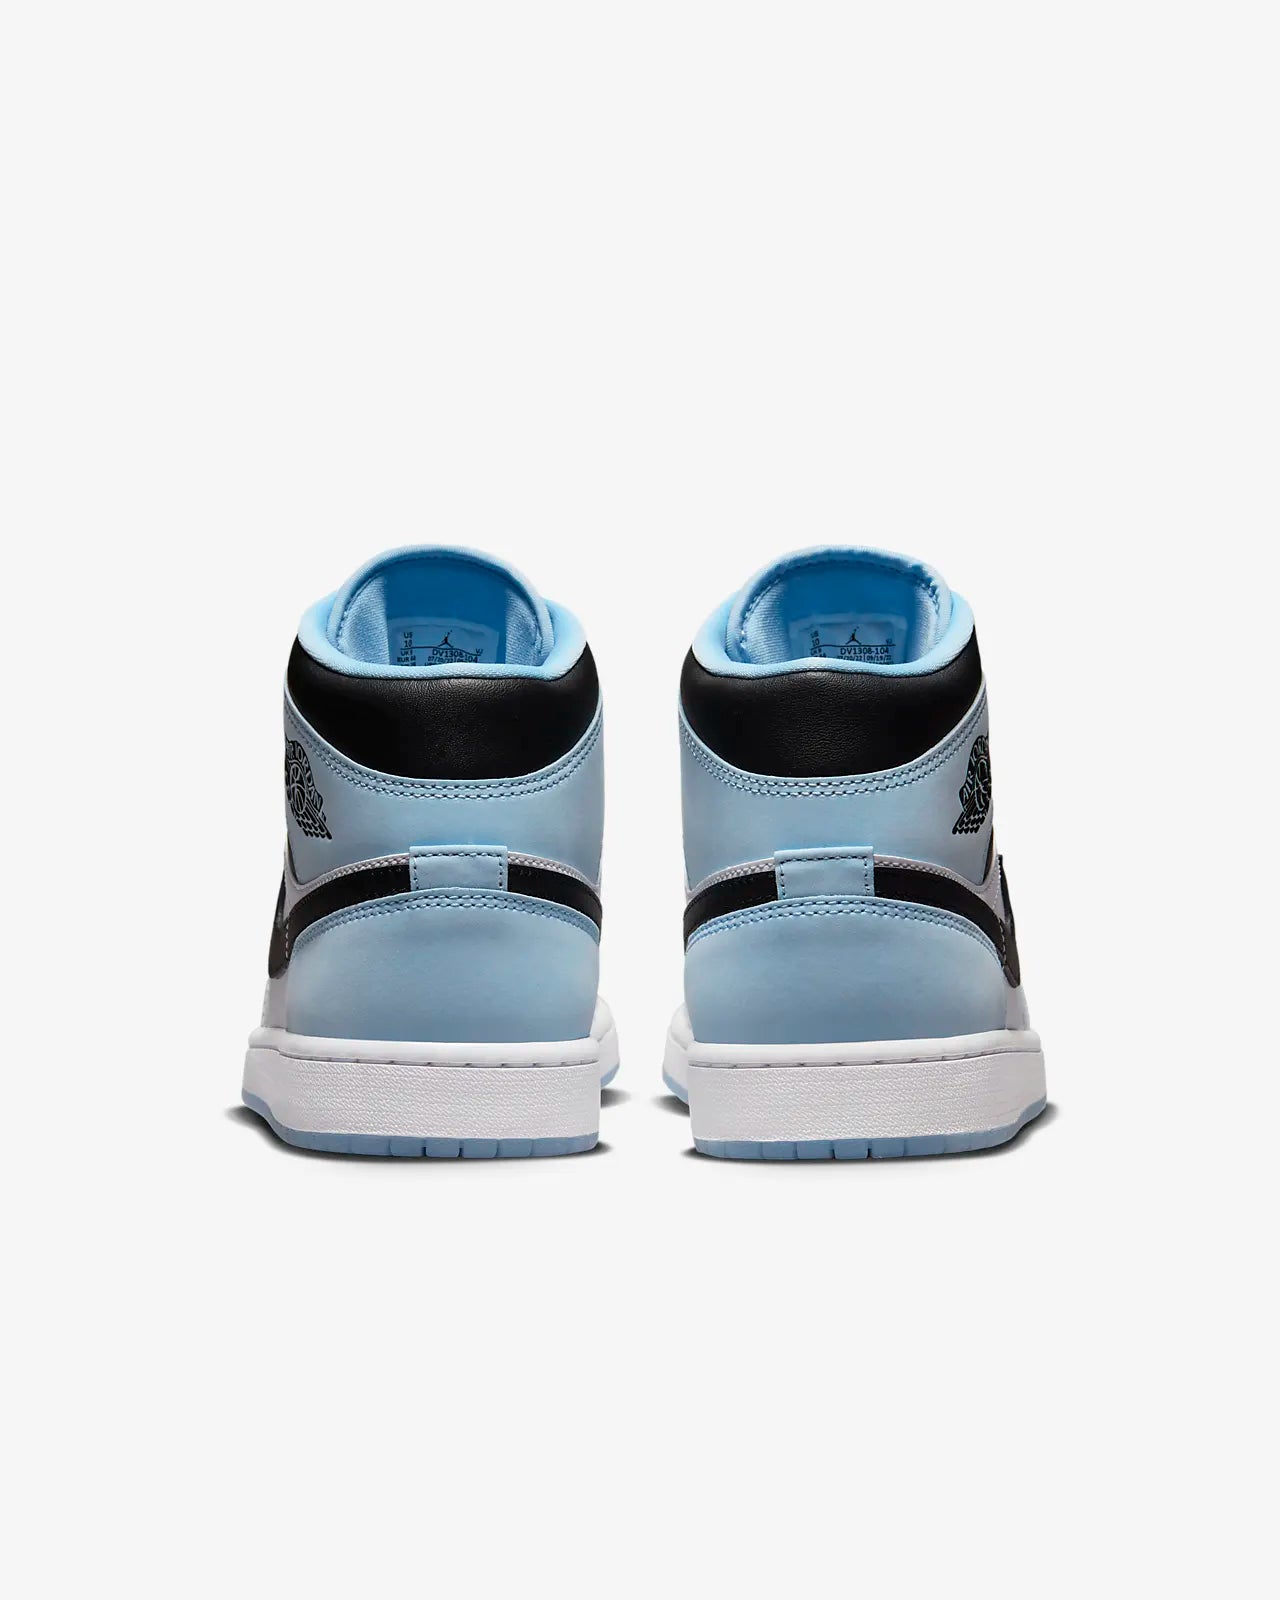 Nike - Air Jordan 1 Mid SE - ICE BLUE